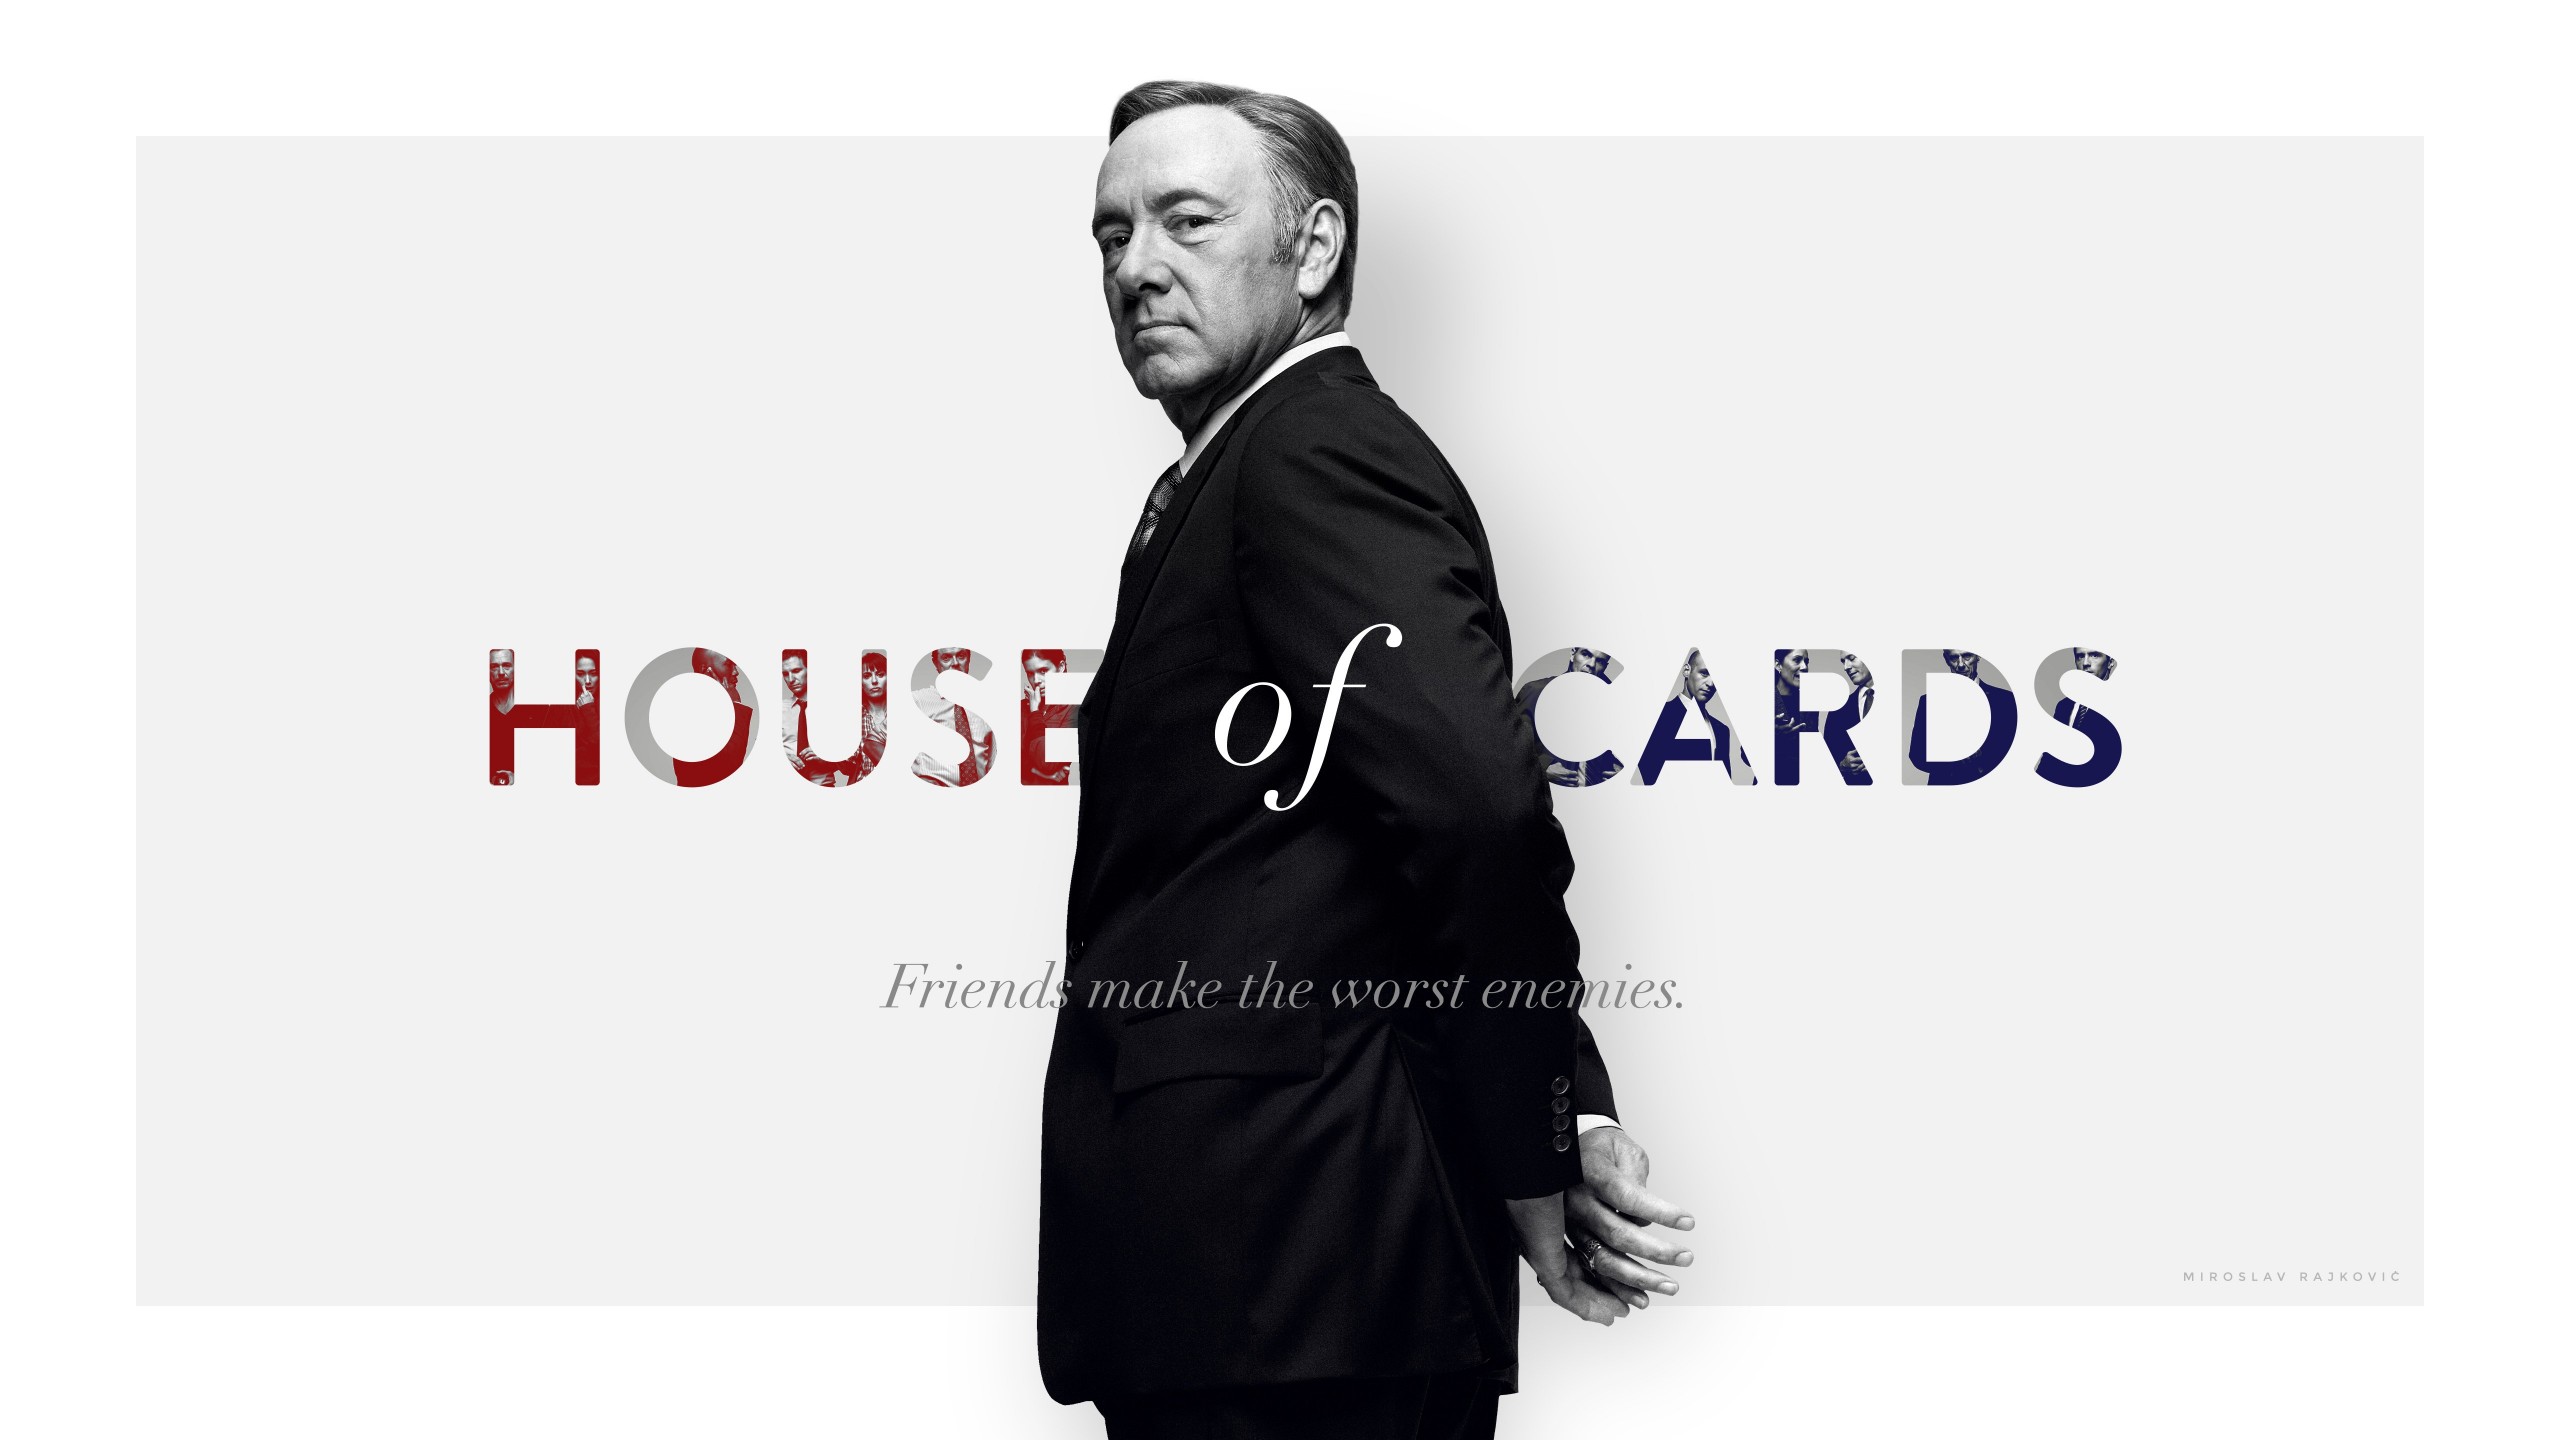 Frank Underwood - House of Cards Wallpaper for Desktop 2560x1440